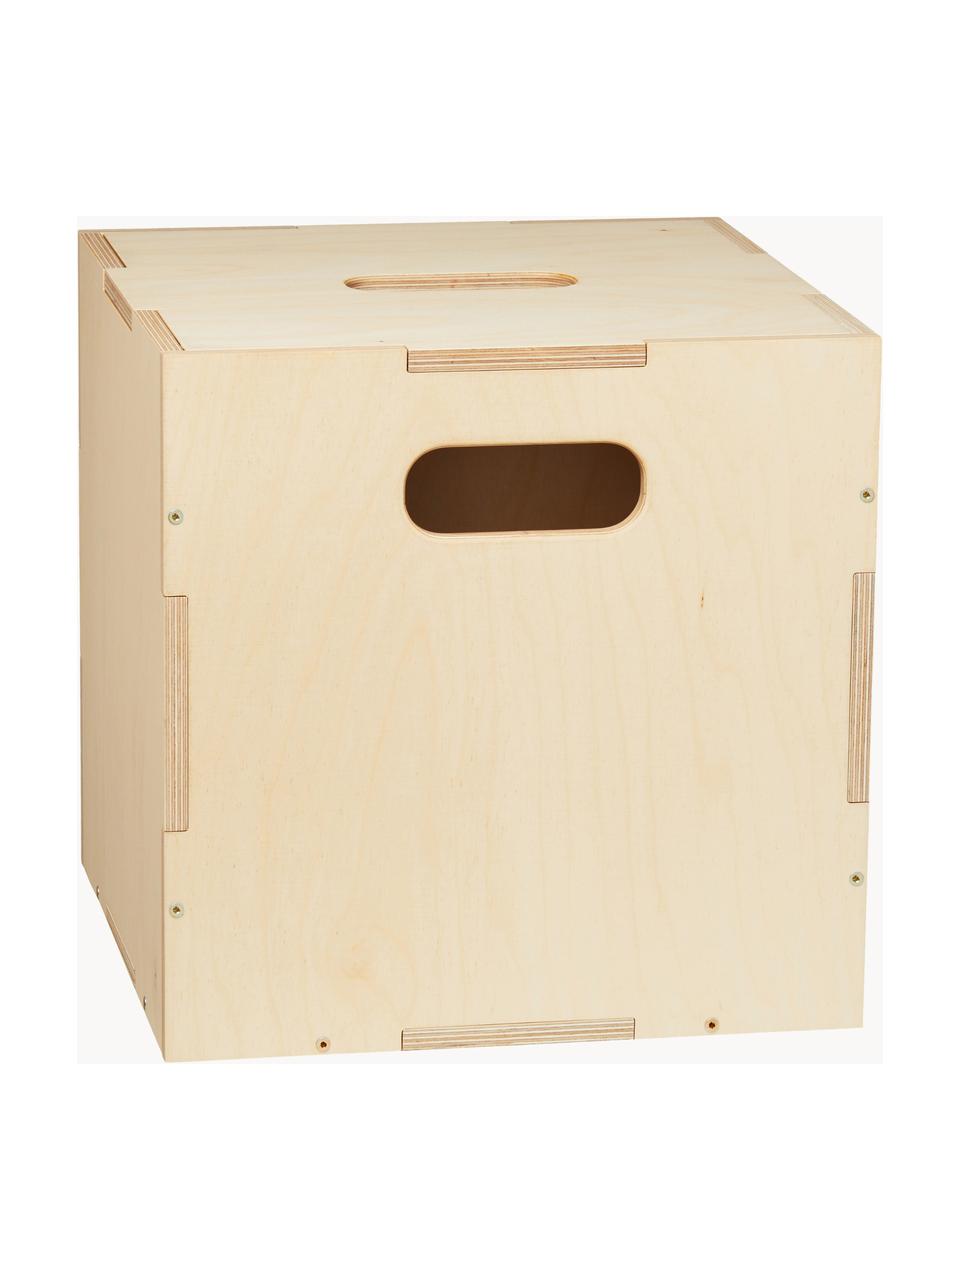 Holz-Aufbewahrungsbox Cube, Birkenholzfurnier

Dieses Produkt wird aus nachhaltig gewonnenem, FSC®-zertifiziertem Holz gefertigt., Helles Holz, B 36 x T 36 cm